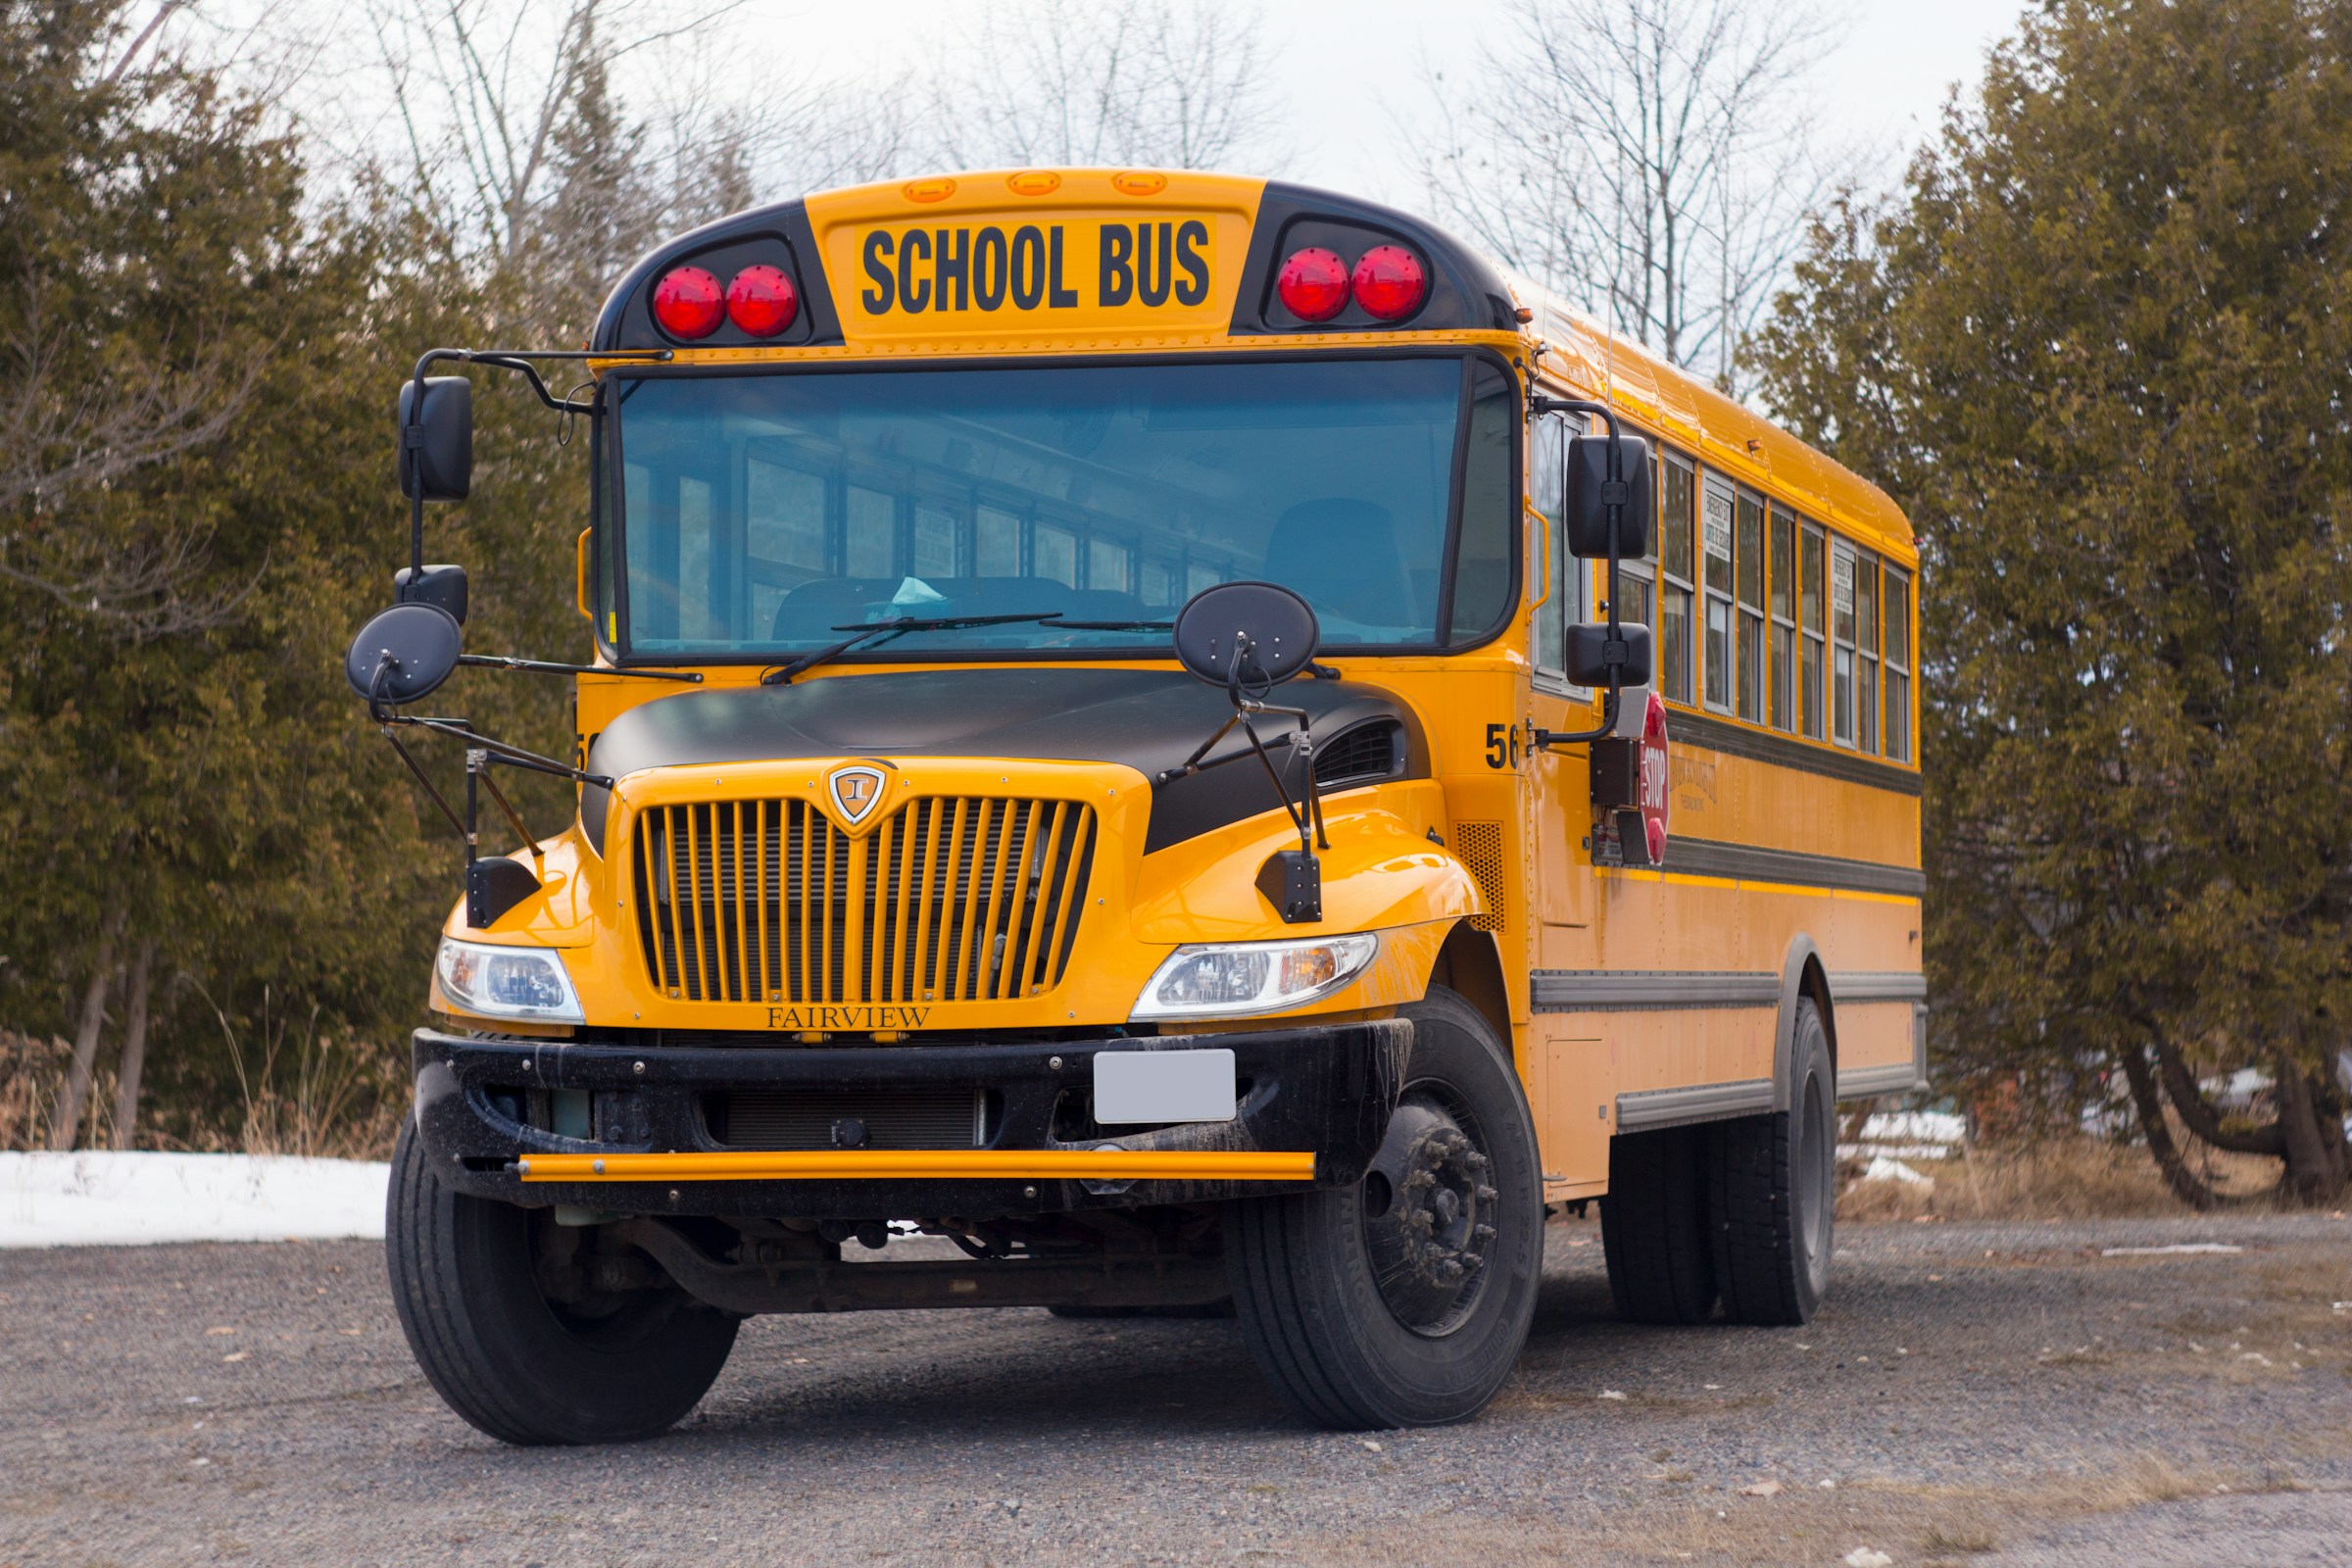 A yellow school bus | Source: Unsplash